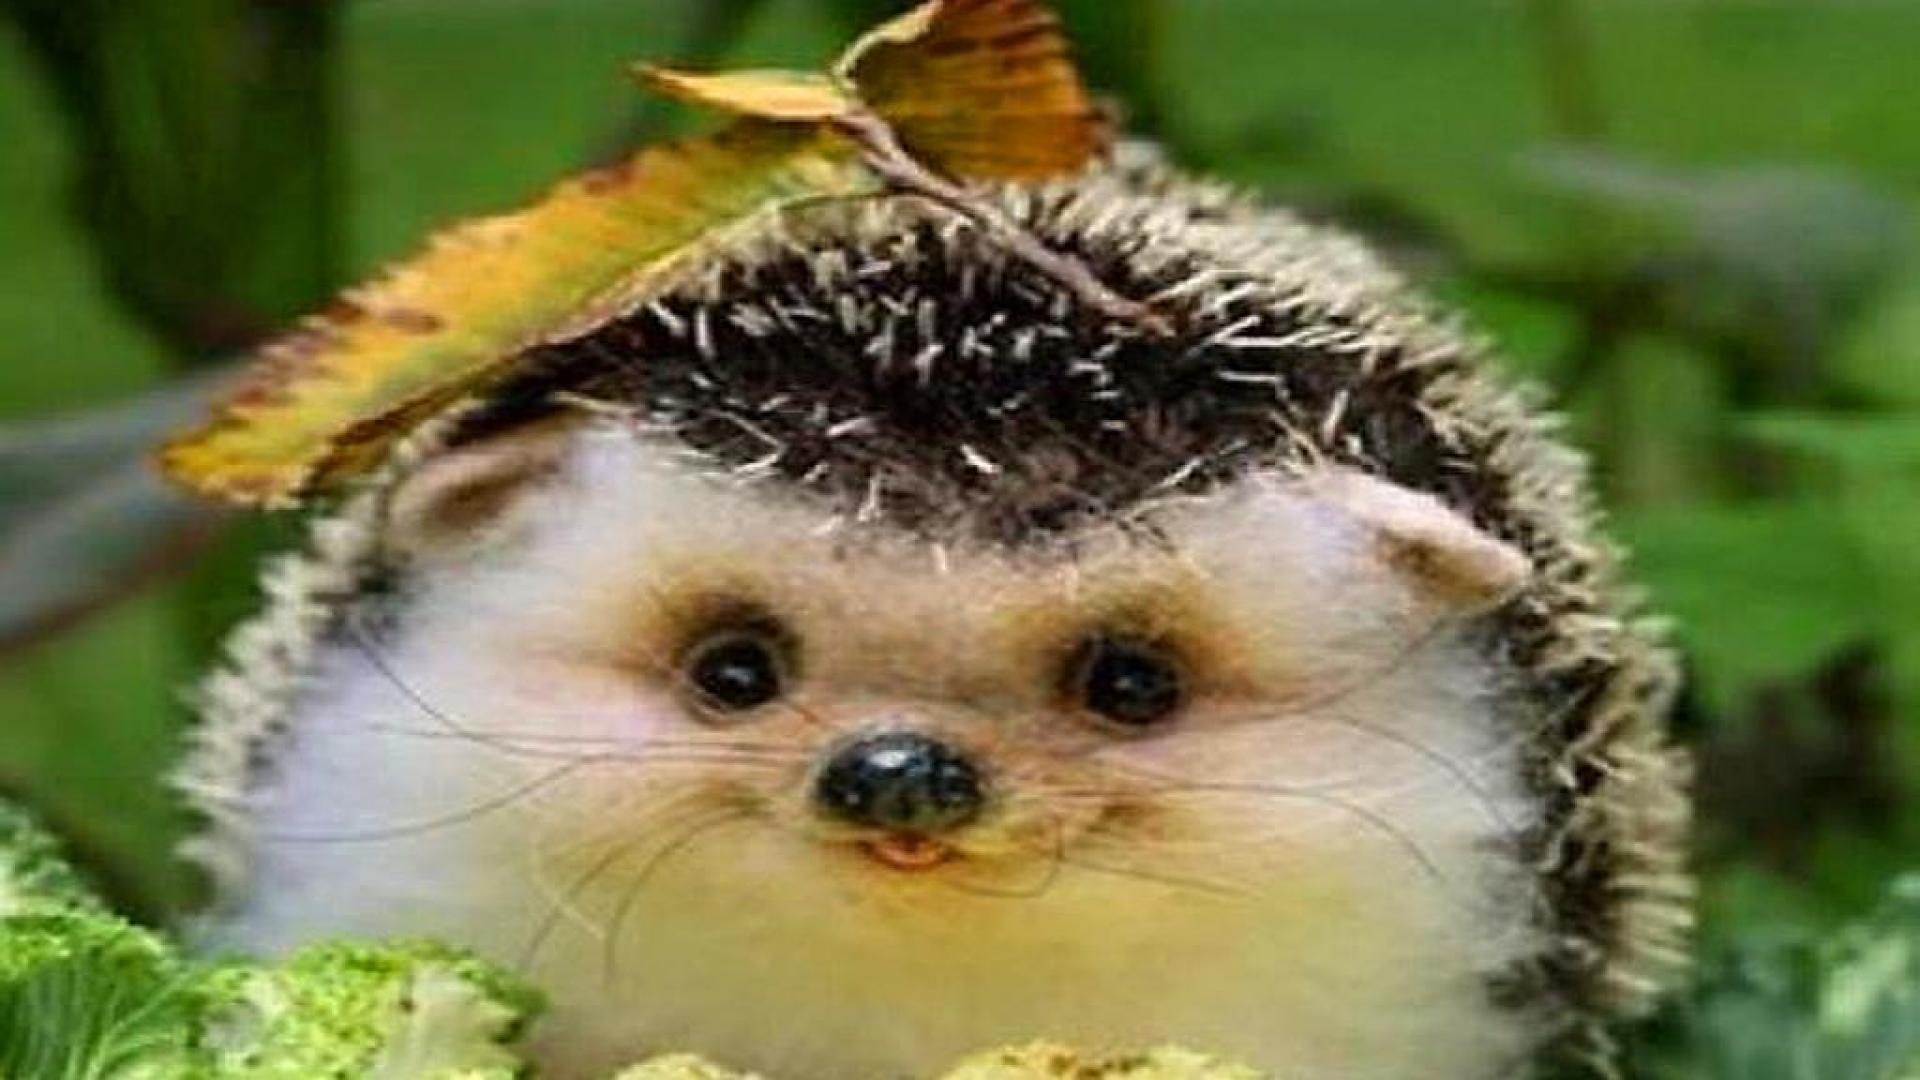 Hedgehog Wallpaper, Full HDQ Hedgehog Picture and Wallpaper